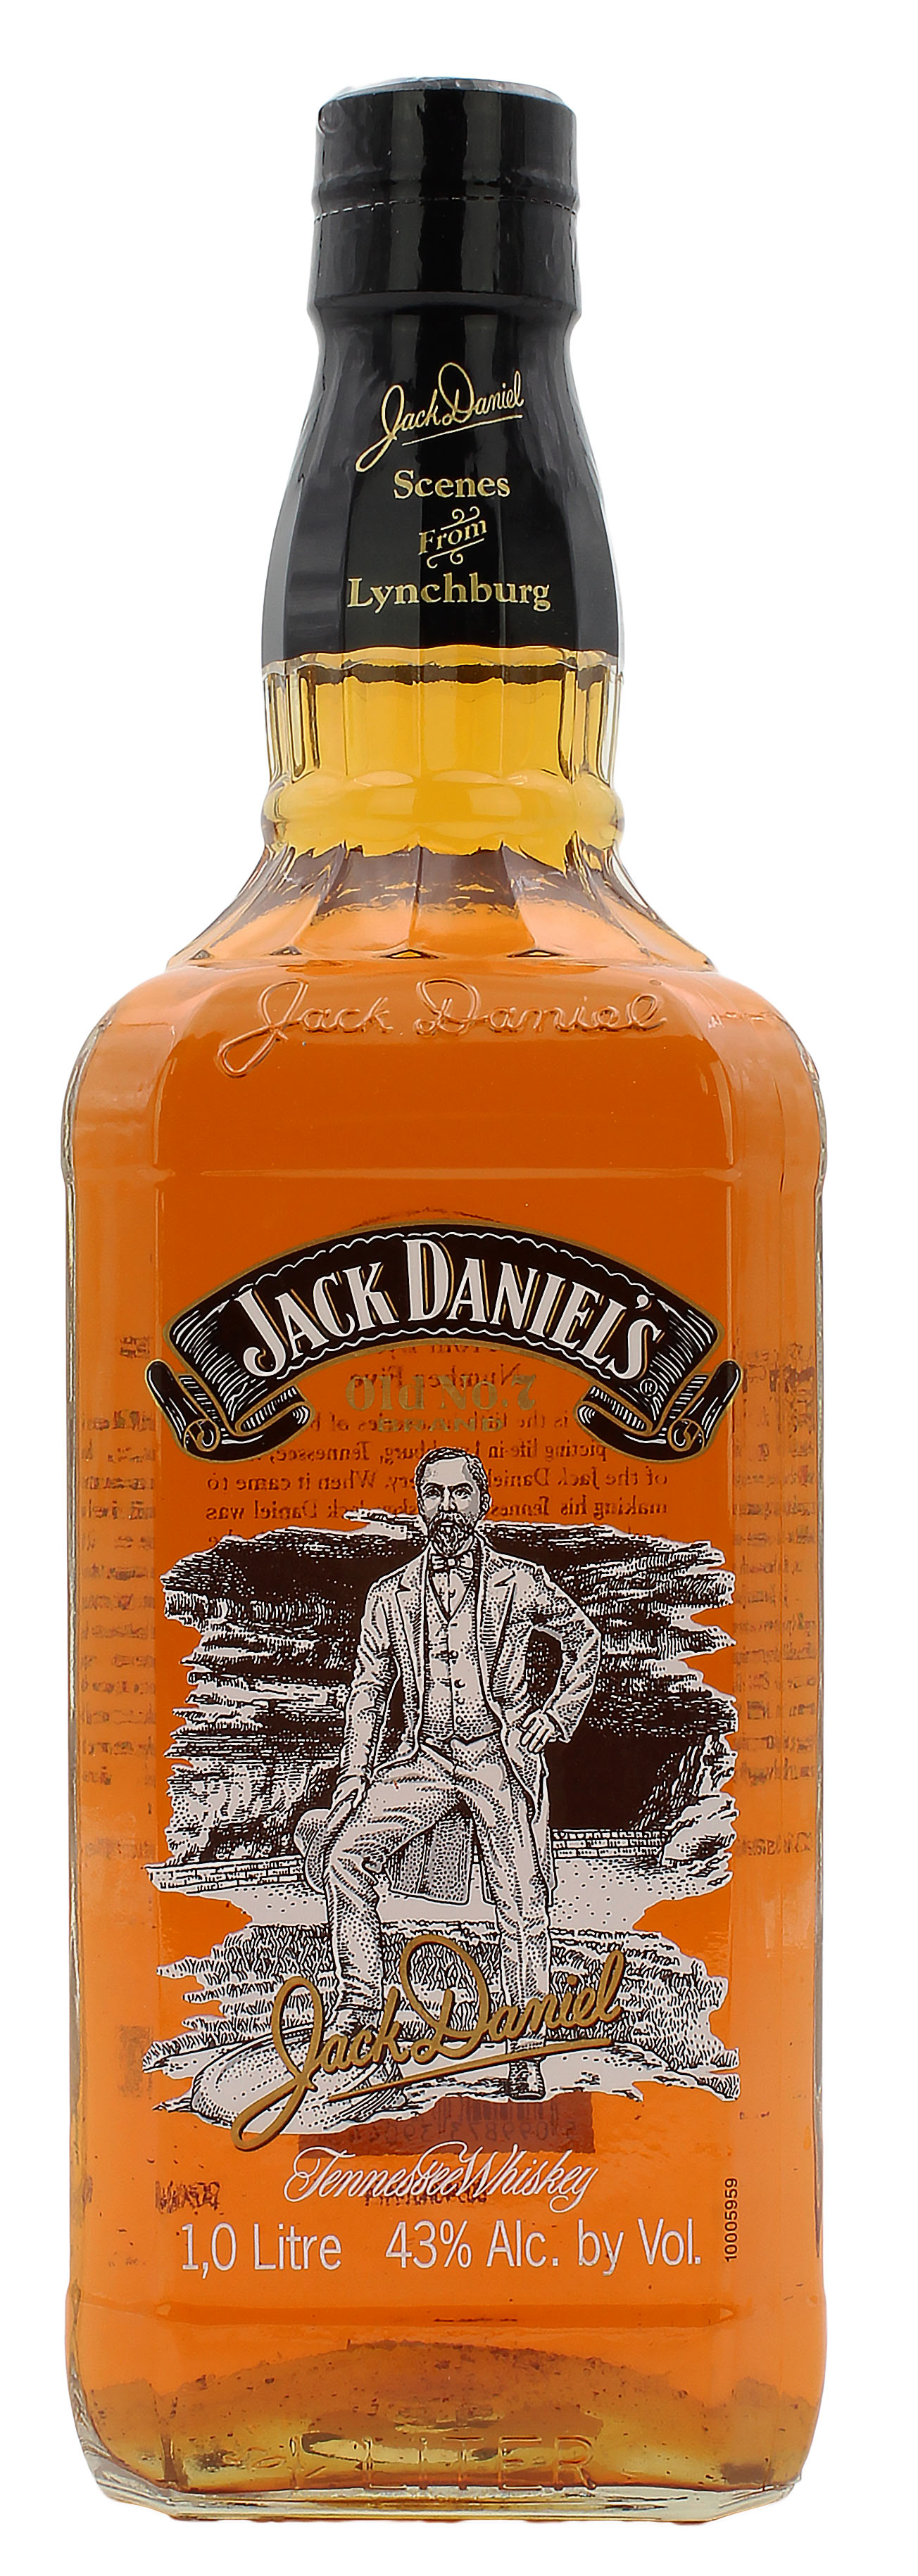 Jack Daniel's Scenes from Lynchburg Number Five 43.0% 1 Liter